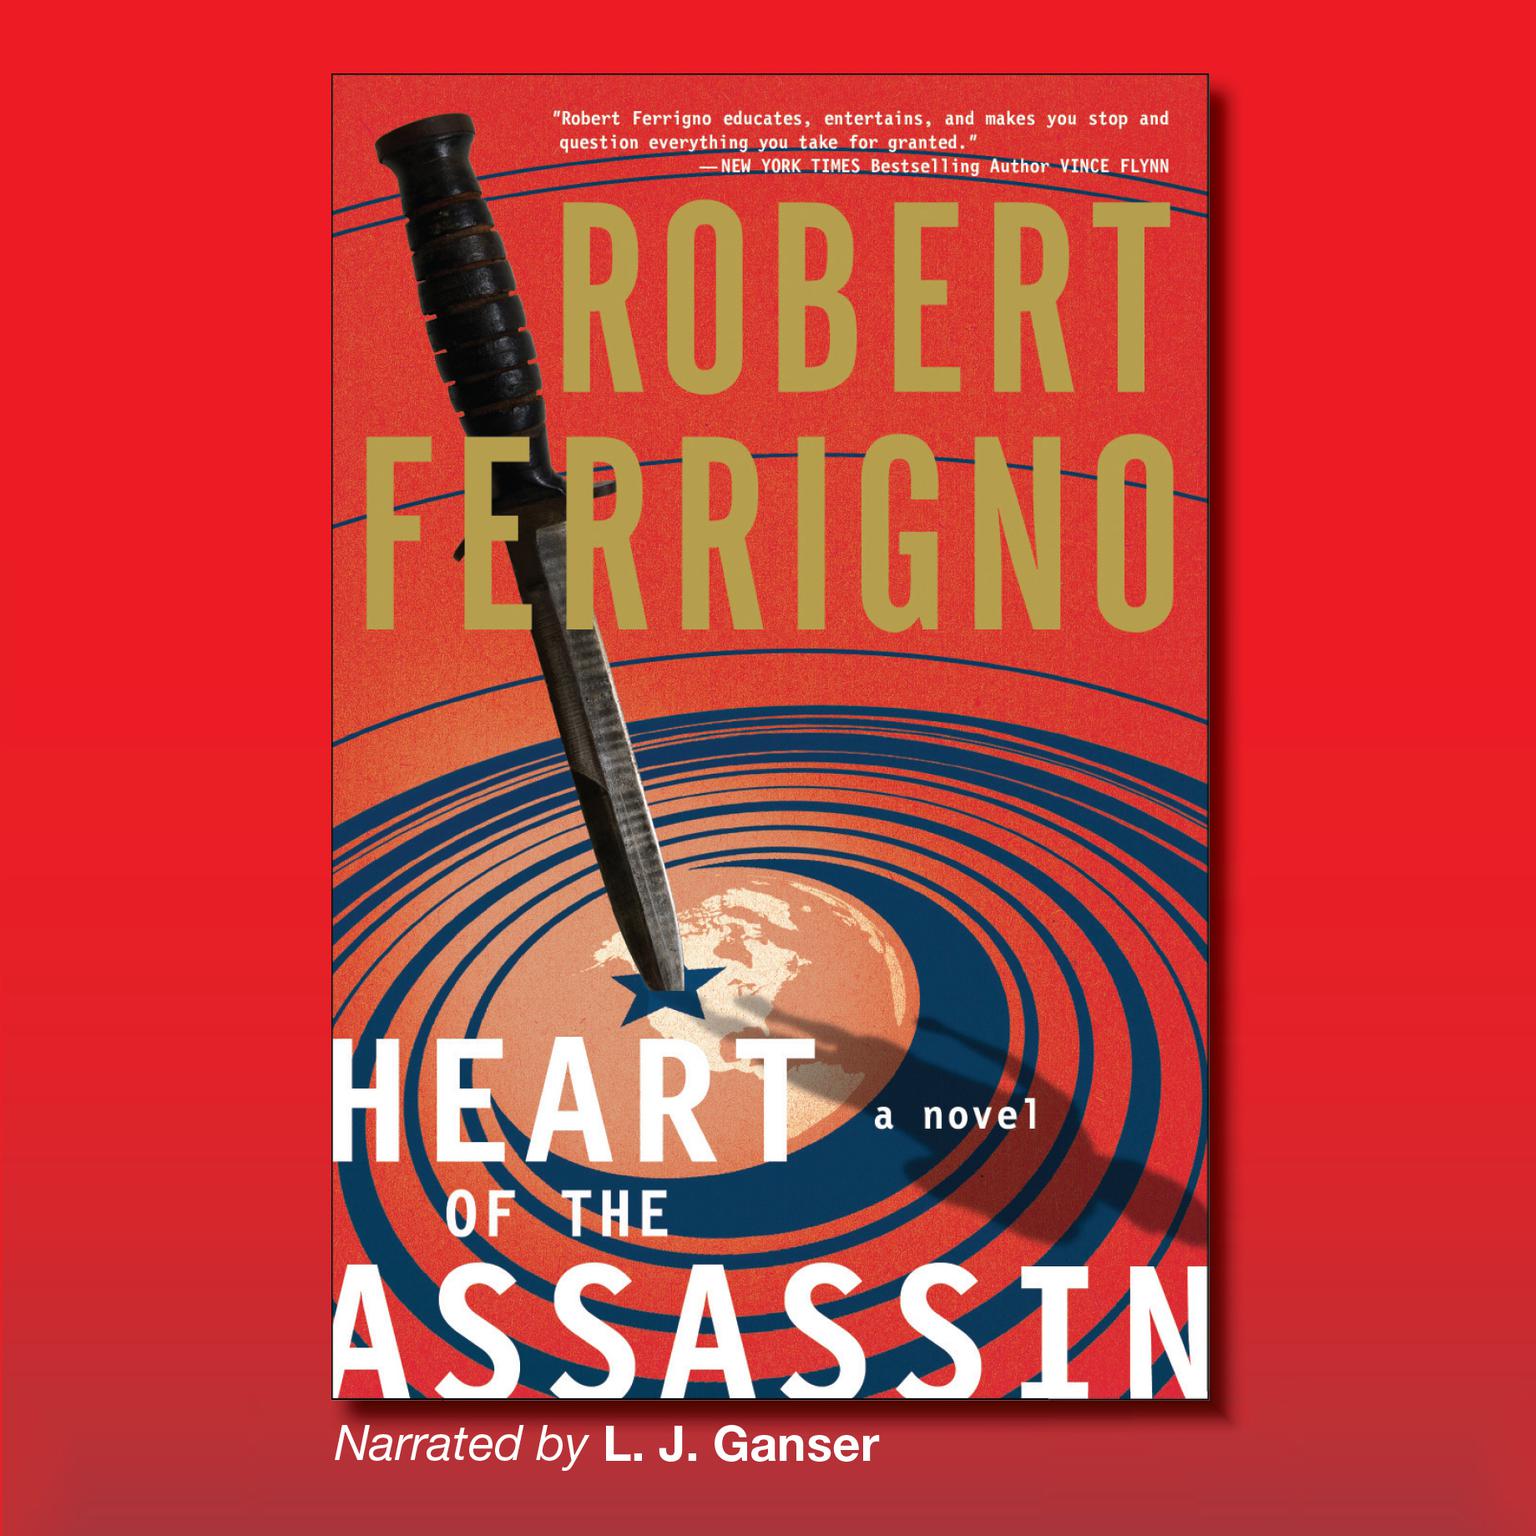 Heart of the Assassin: A Novel Audiobook, by Robert Ferrigno